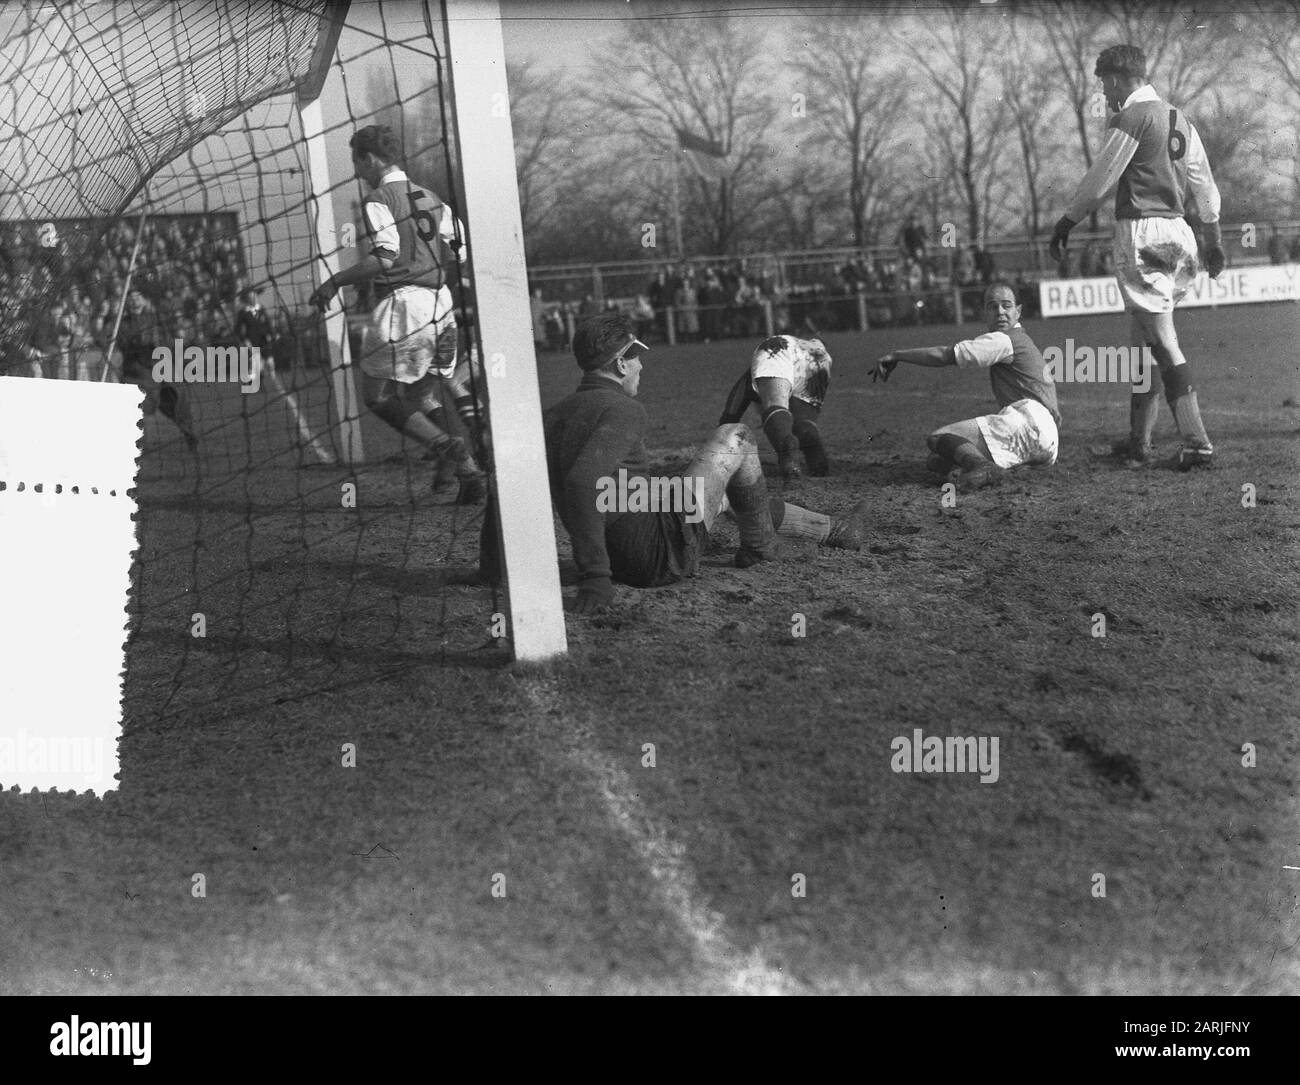 Football DWS against SVV 5-1, second goal Date: March 6, 1955 Keywords: goals, sport, football Personal name: kouwen Stock Photo